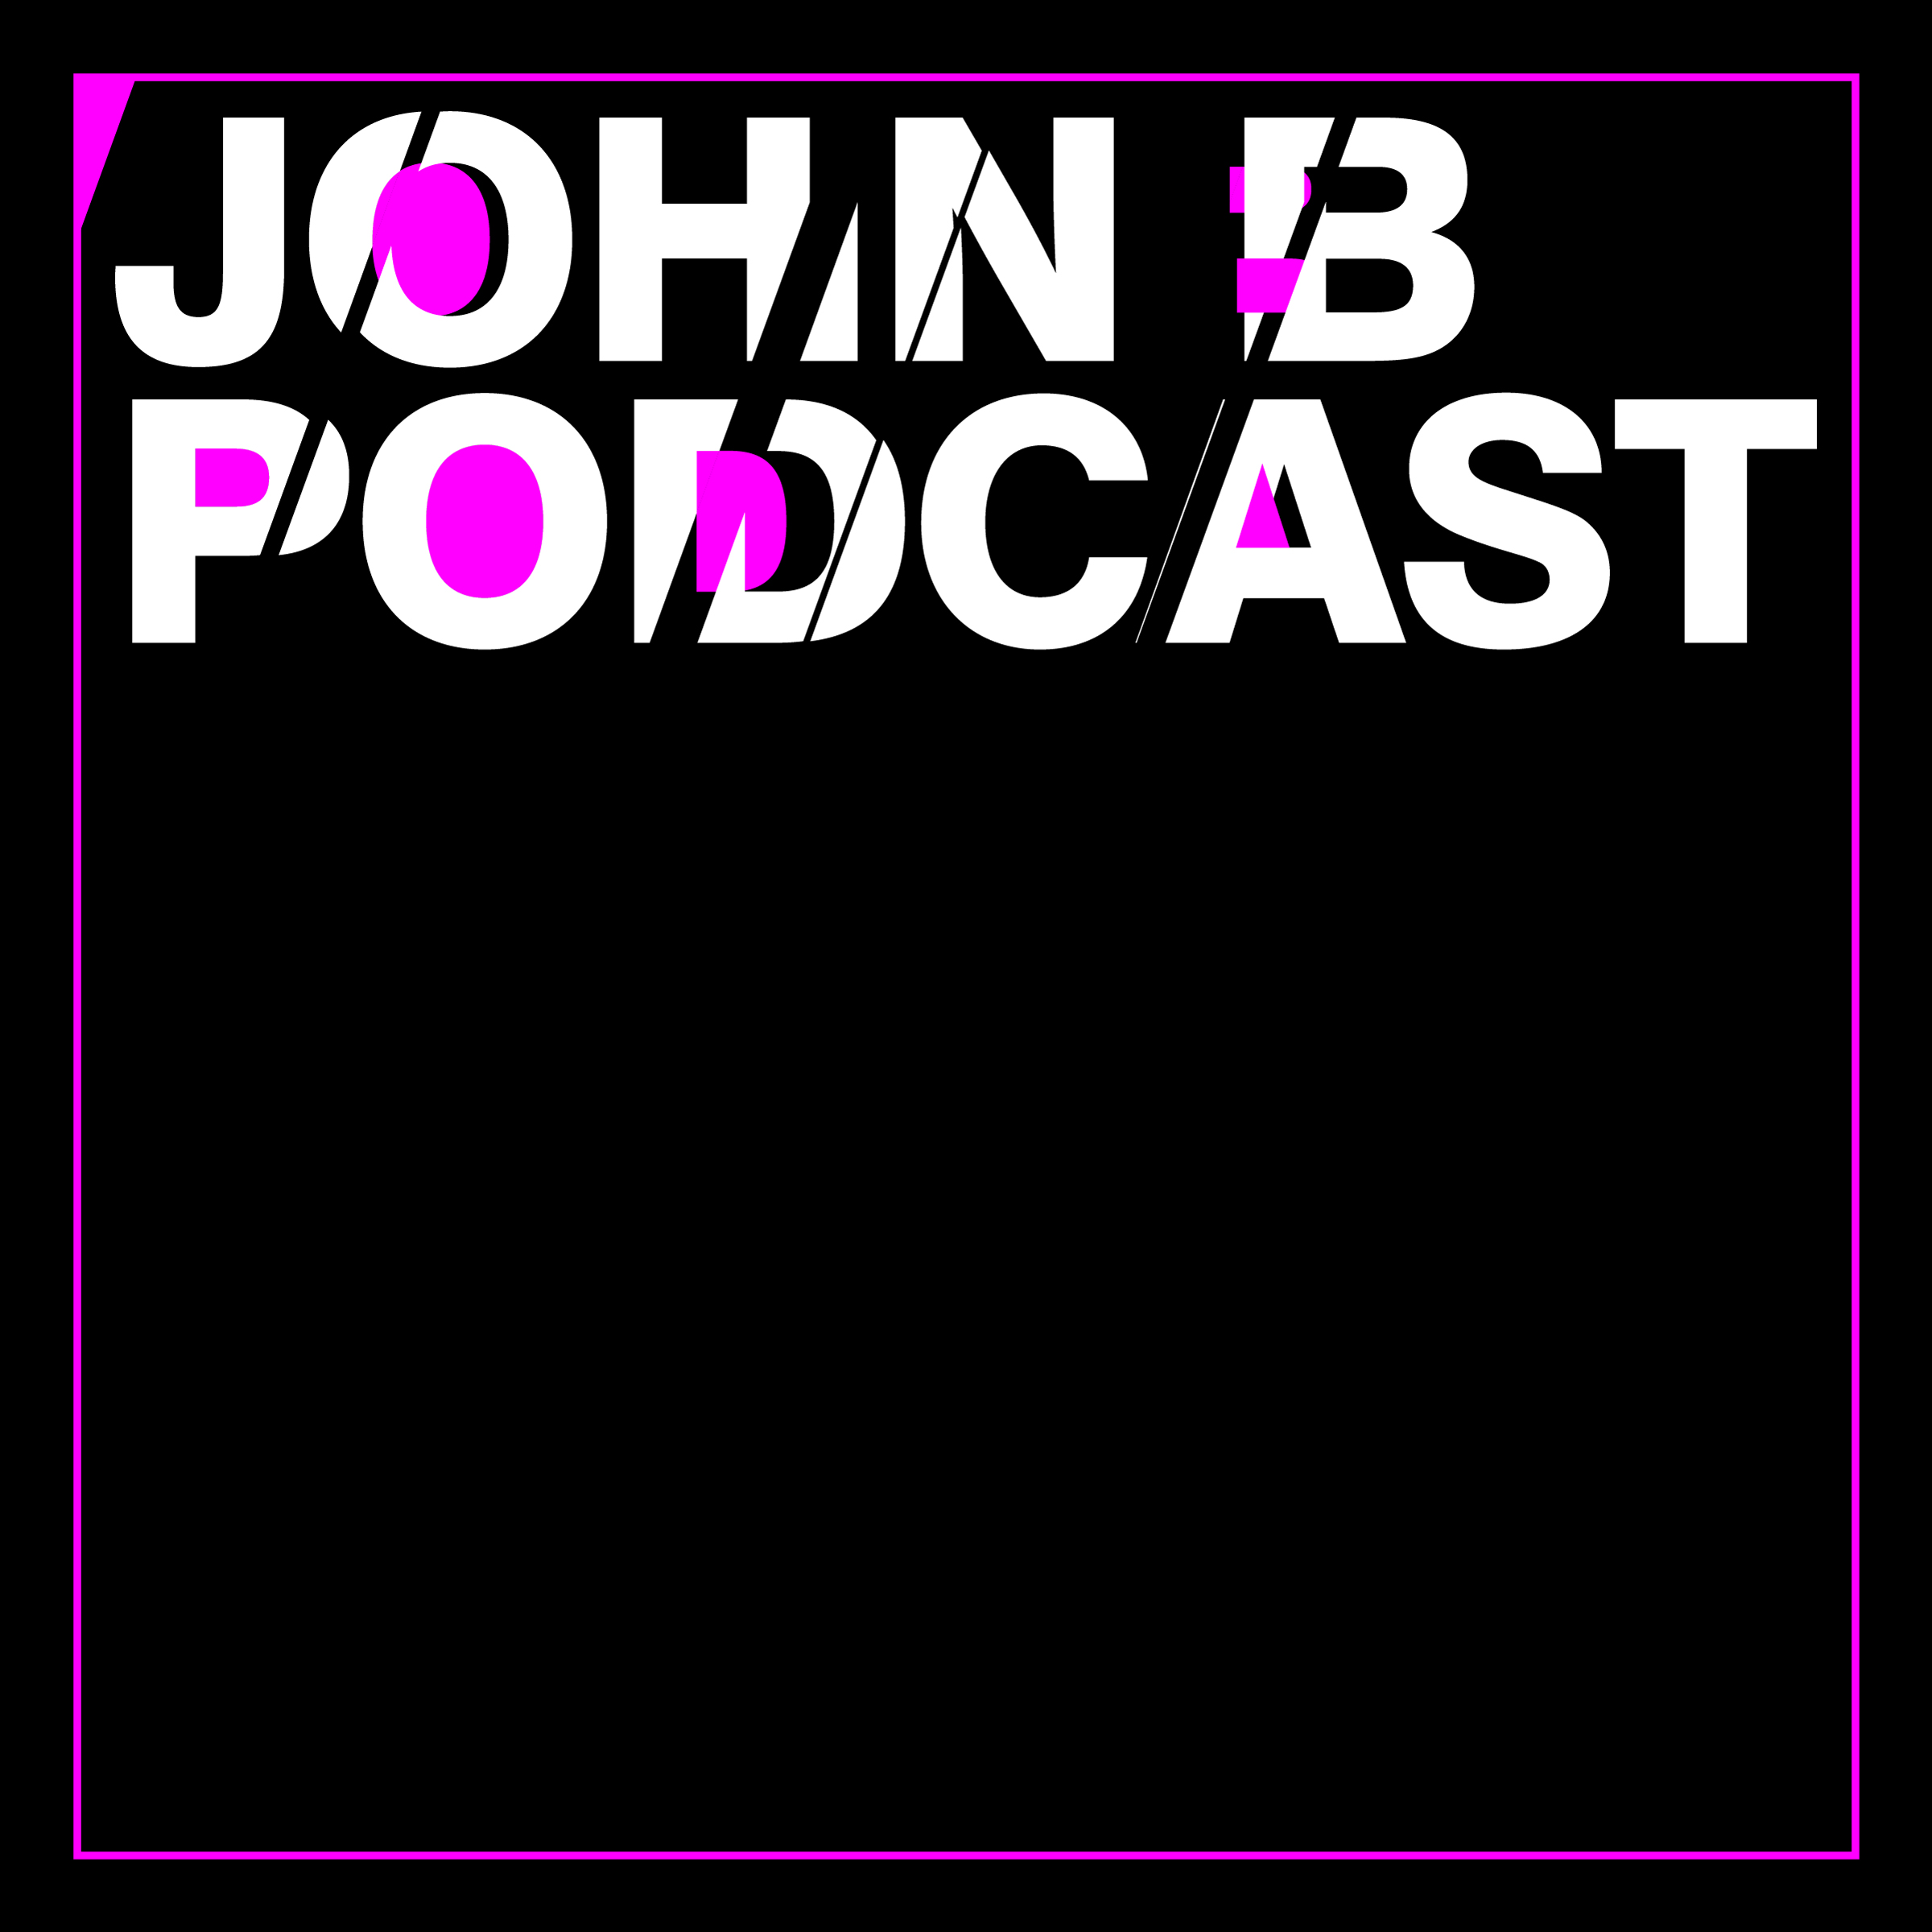 The John B Drum & Bass Podcast cover art